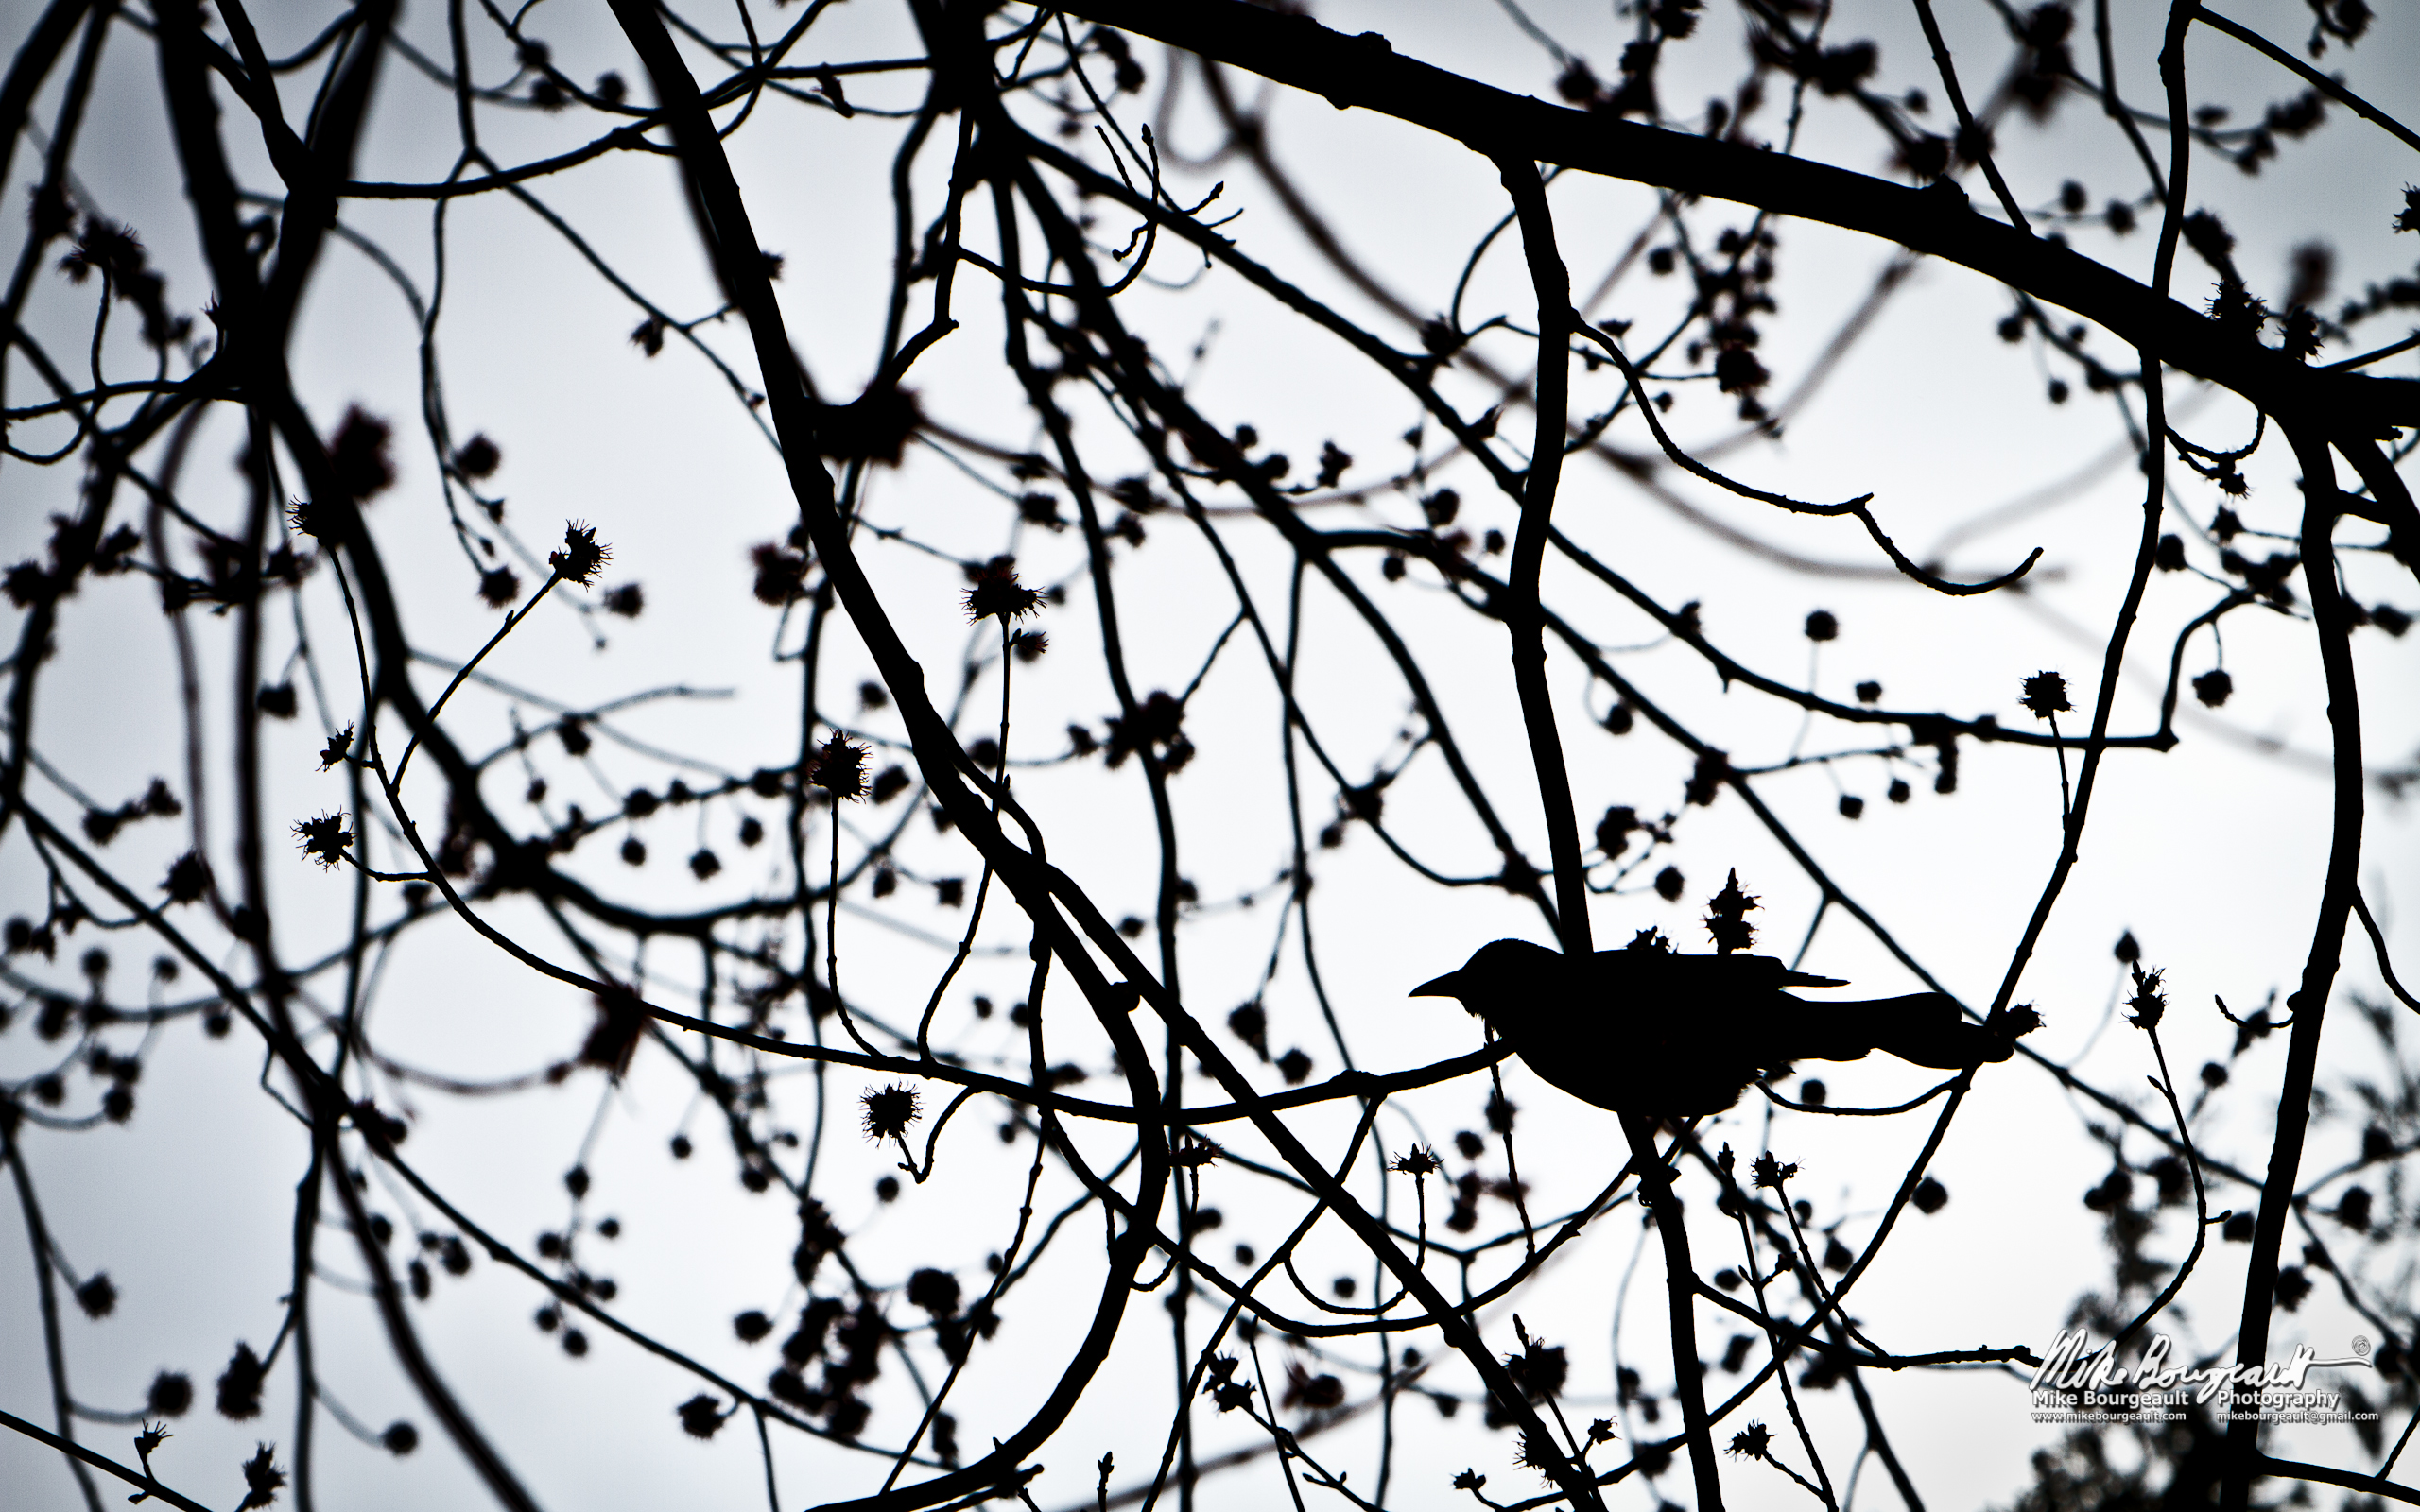 June 20, 2012 – Bird In A Tree